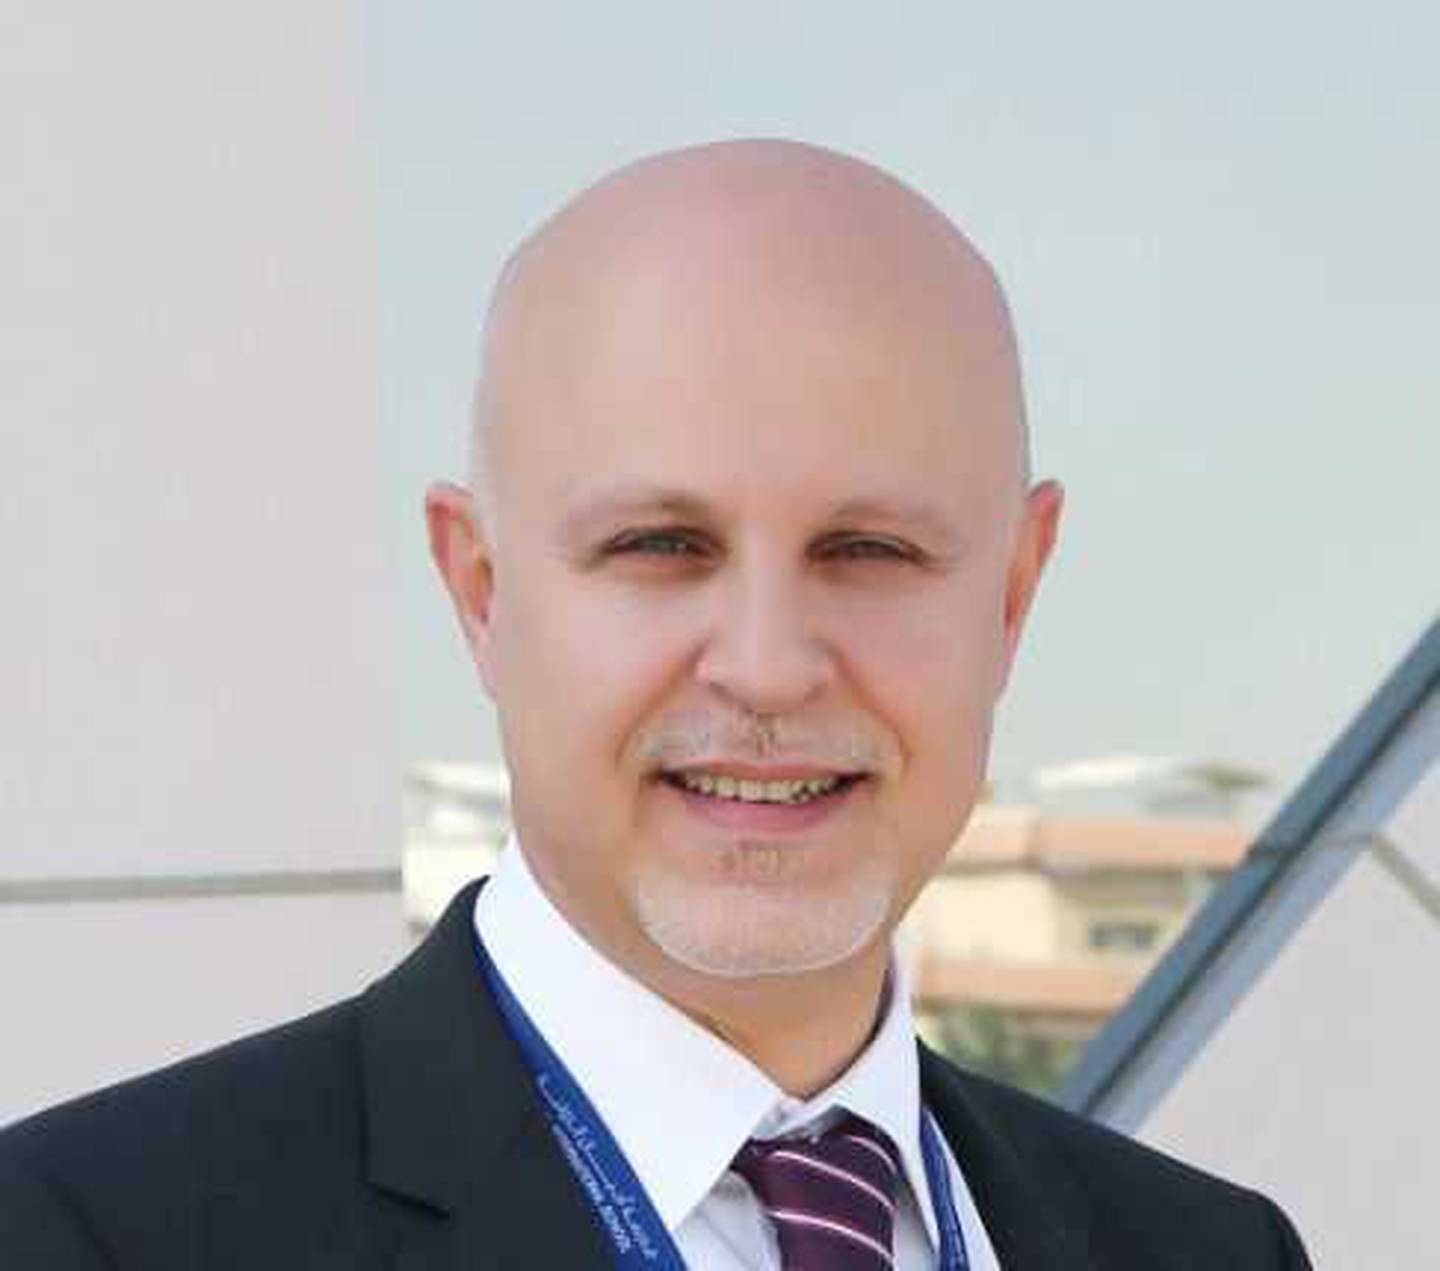 Mohammed Saad, Principal of the Dubai Arabian American Private School in Muhaisnah